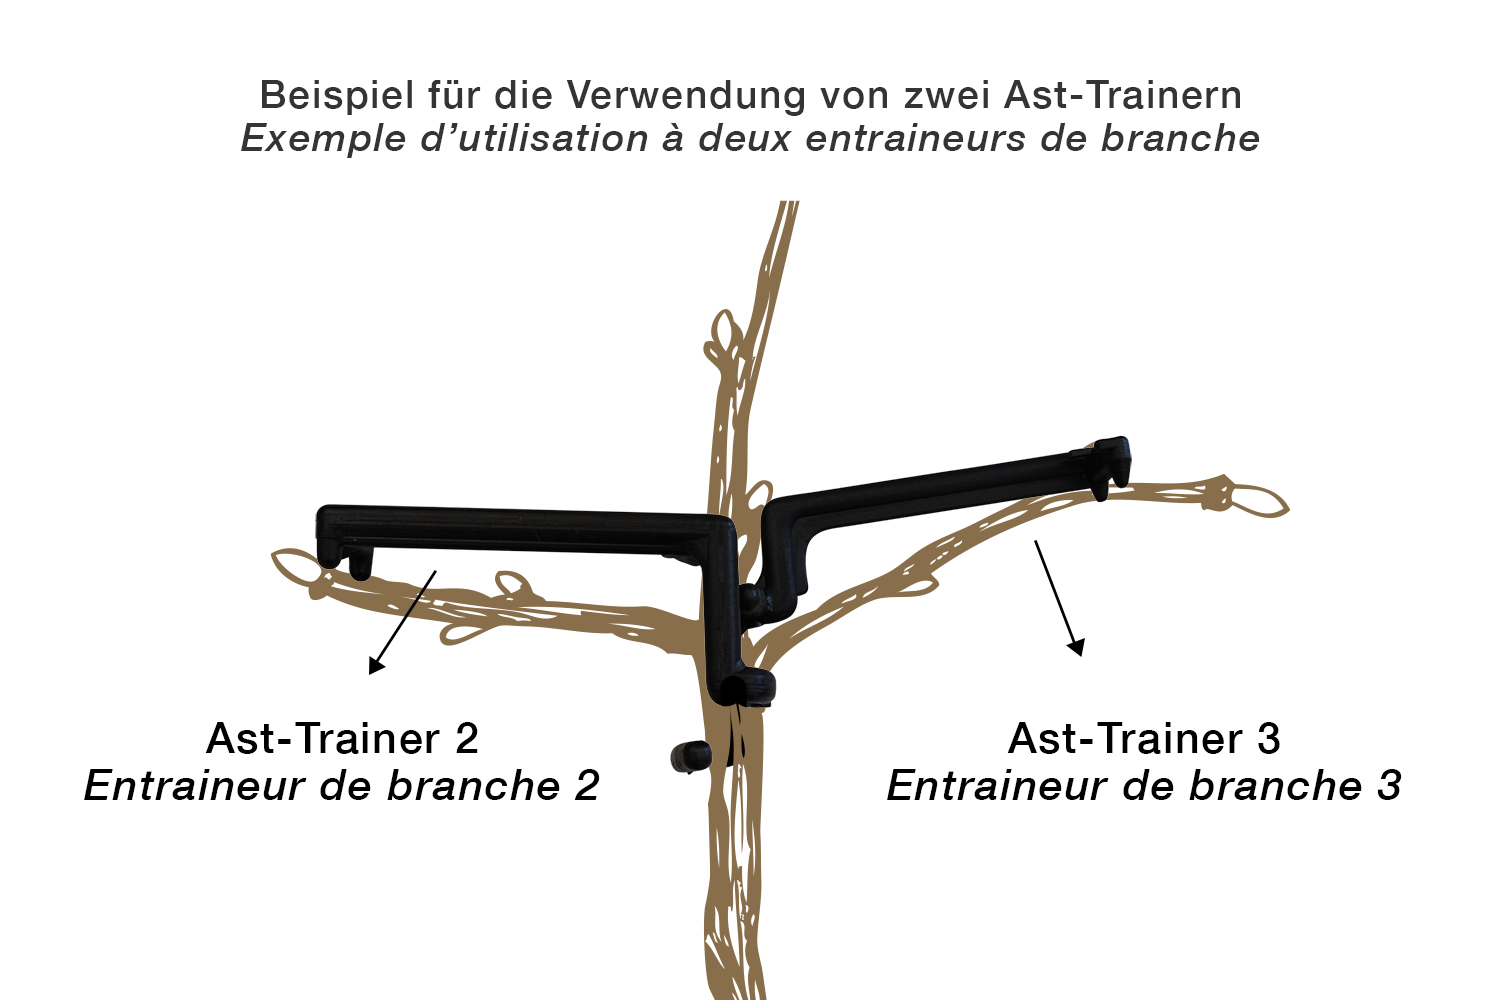 Ast-Trainer 3